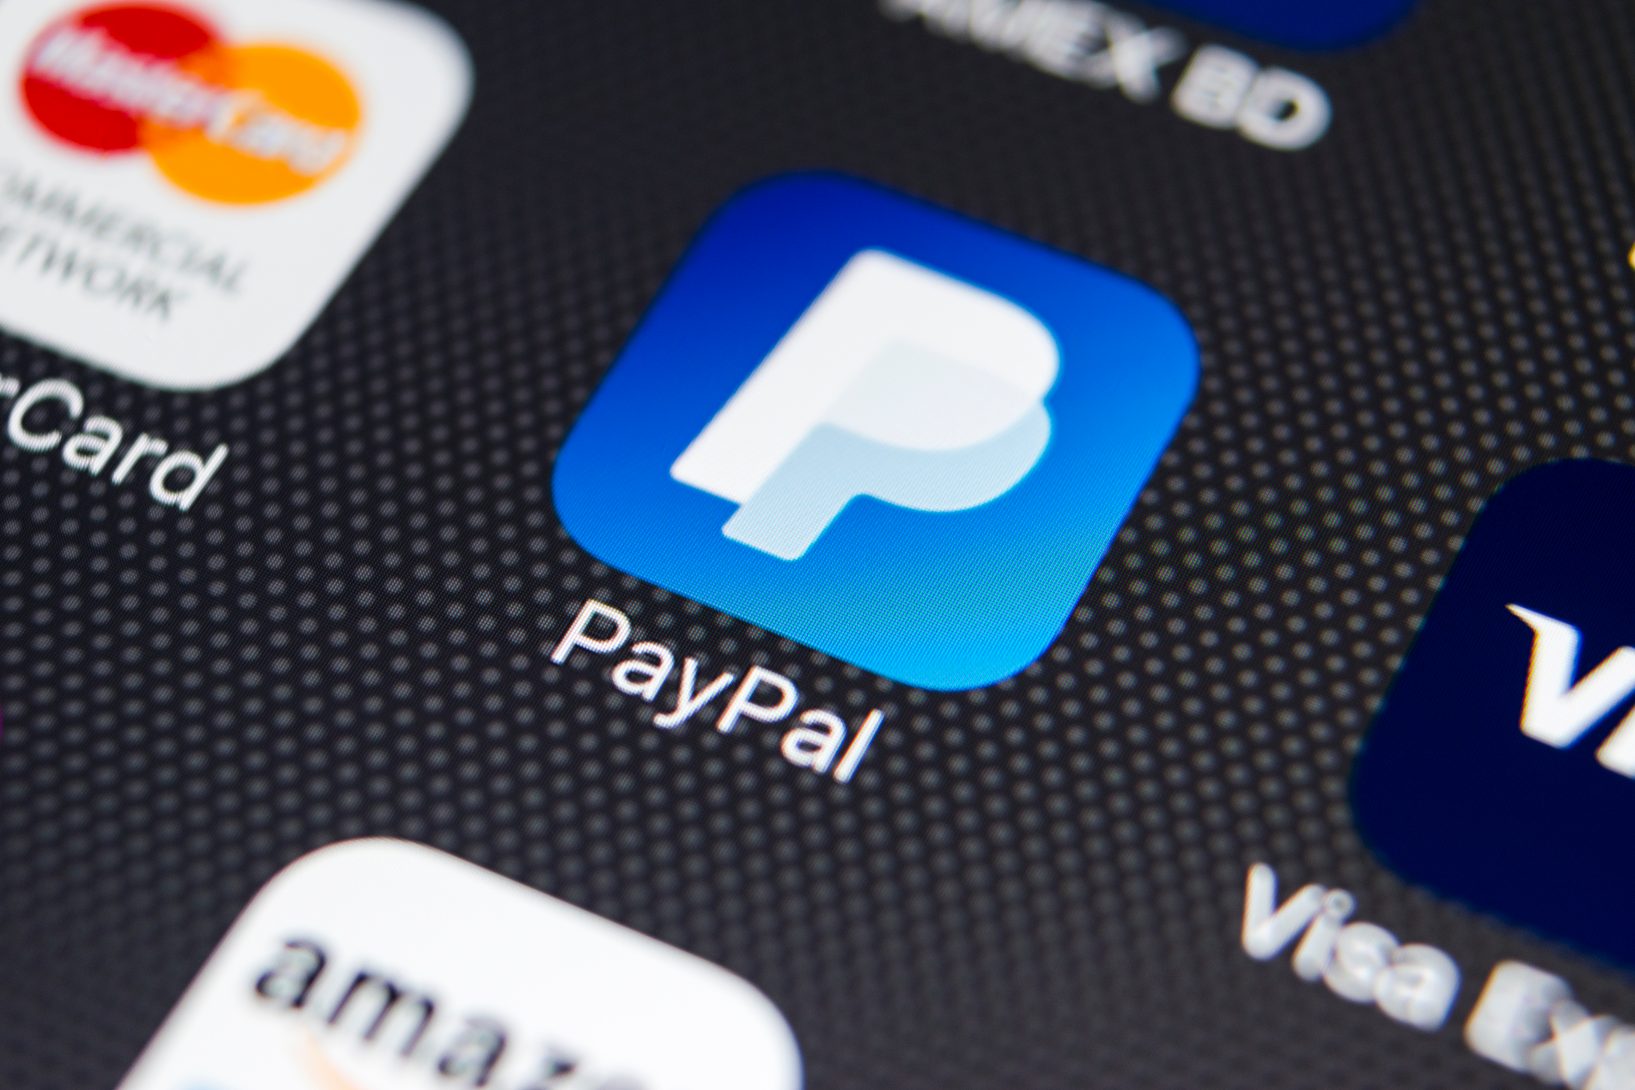 PayPal Acquires Sweden-Based Payment Platform iZettle For $2.2 Billion ...
